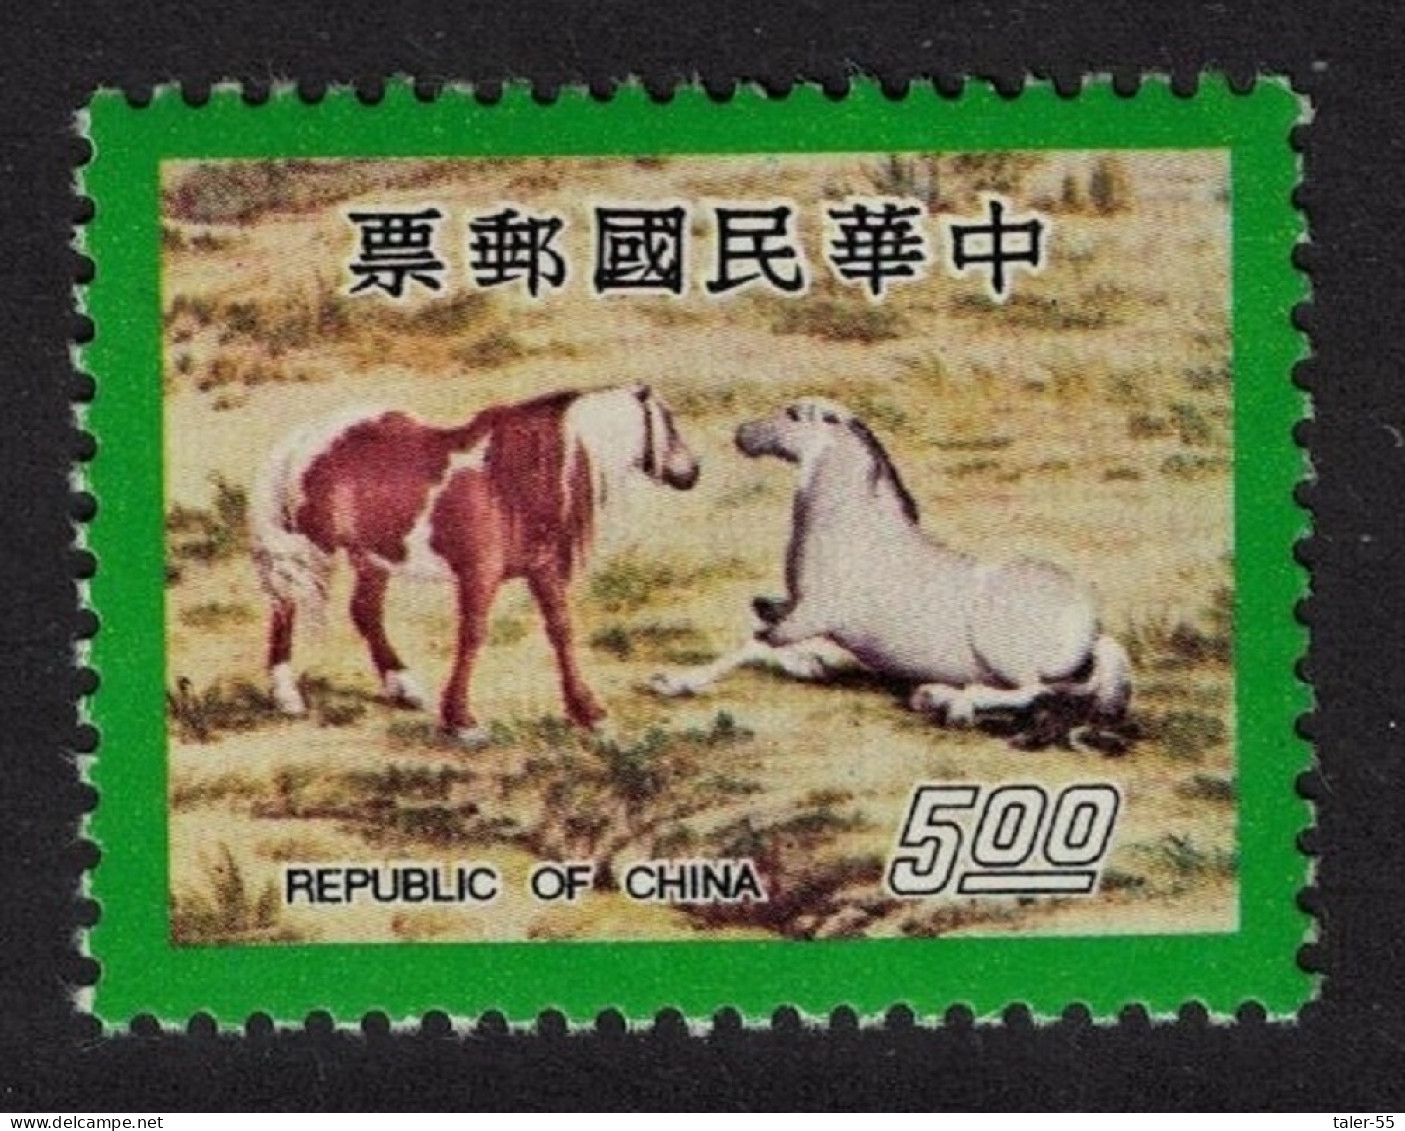 Taiwan Chinese Year Of The Horse $5 1977 MNH SG#1181 MI#1220 - Nuovi